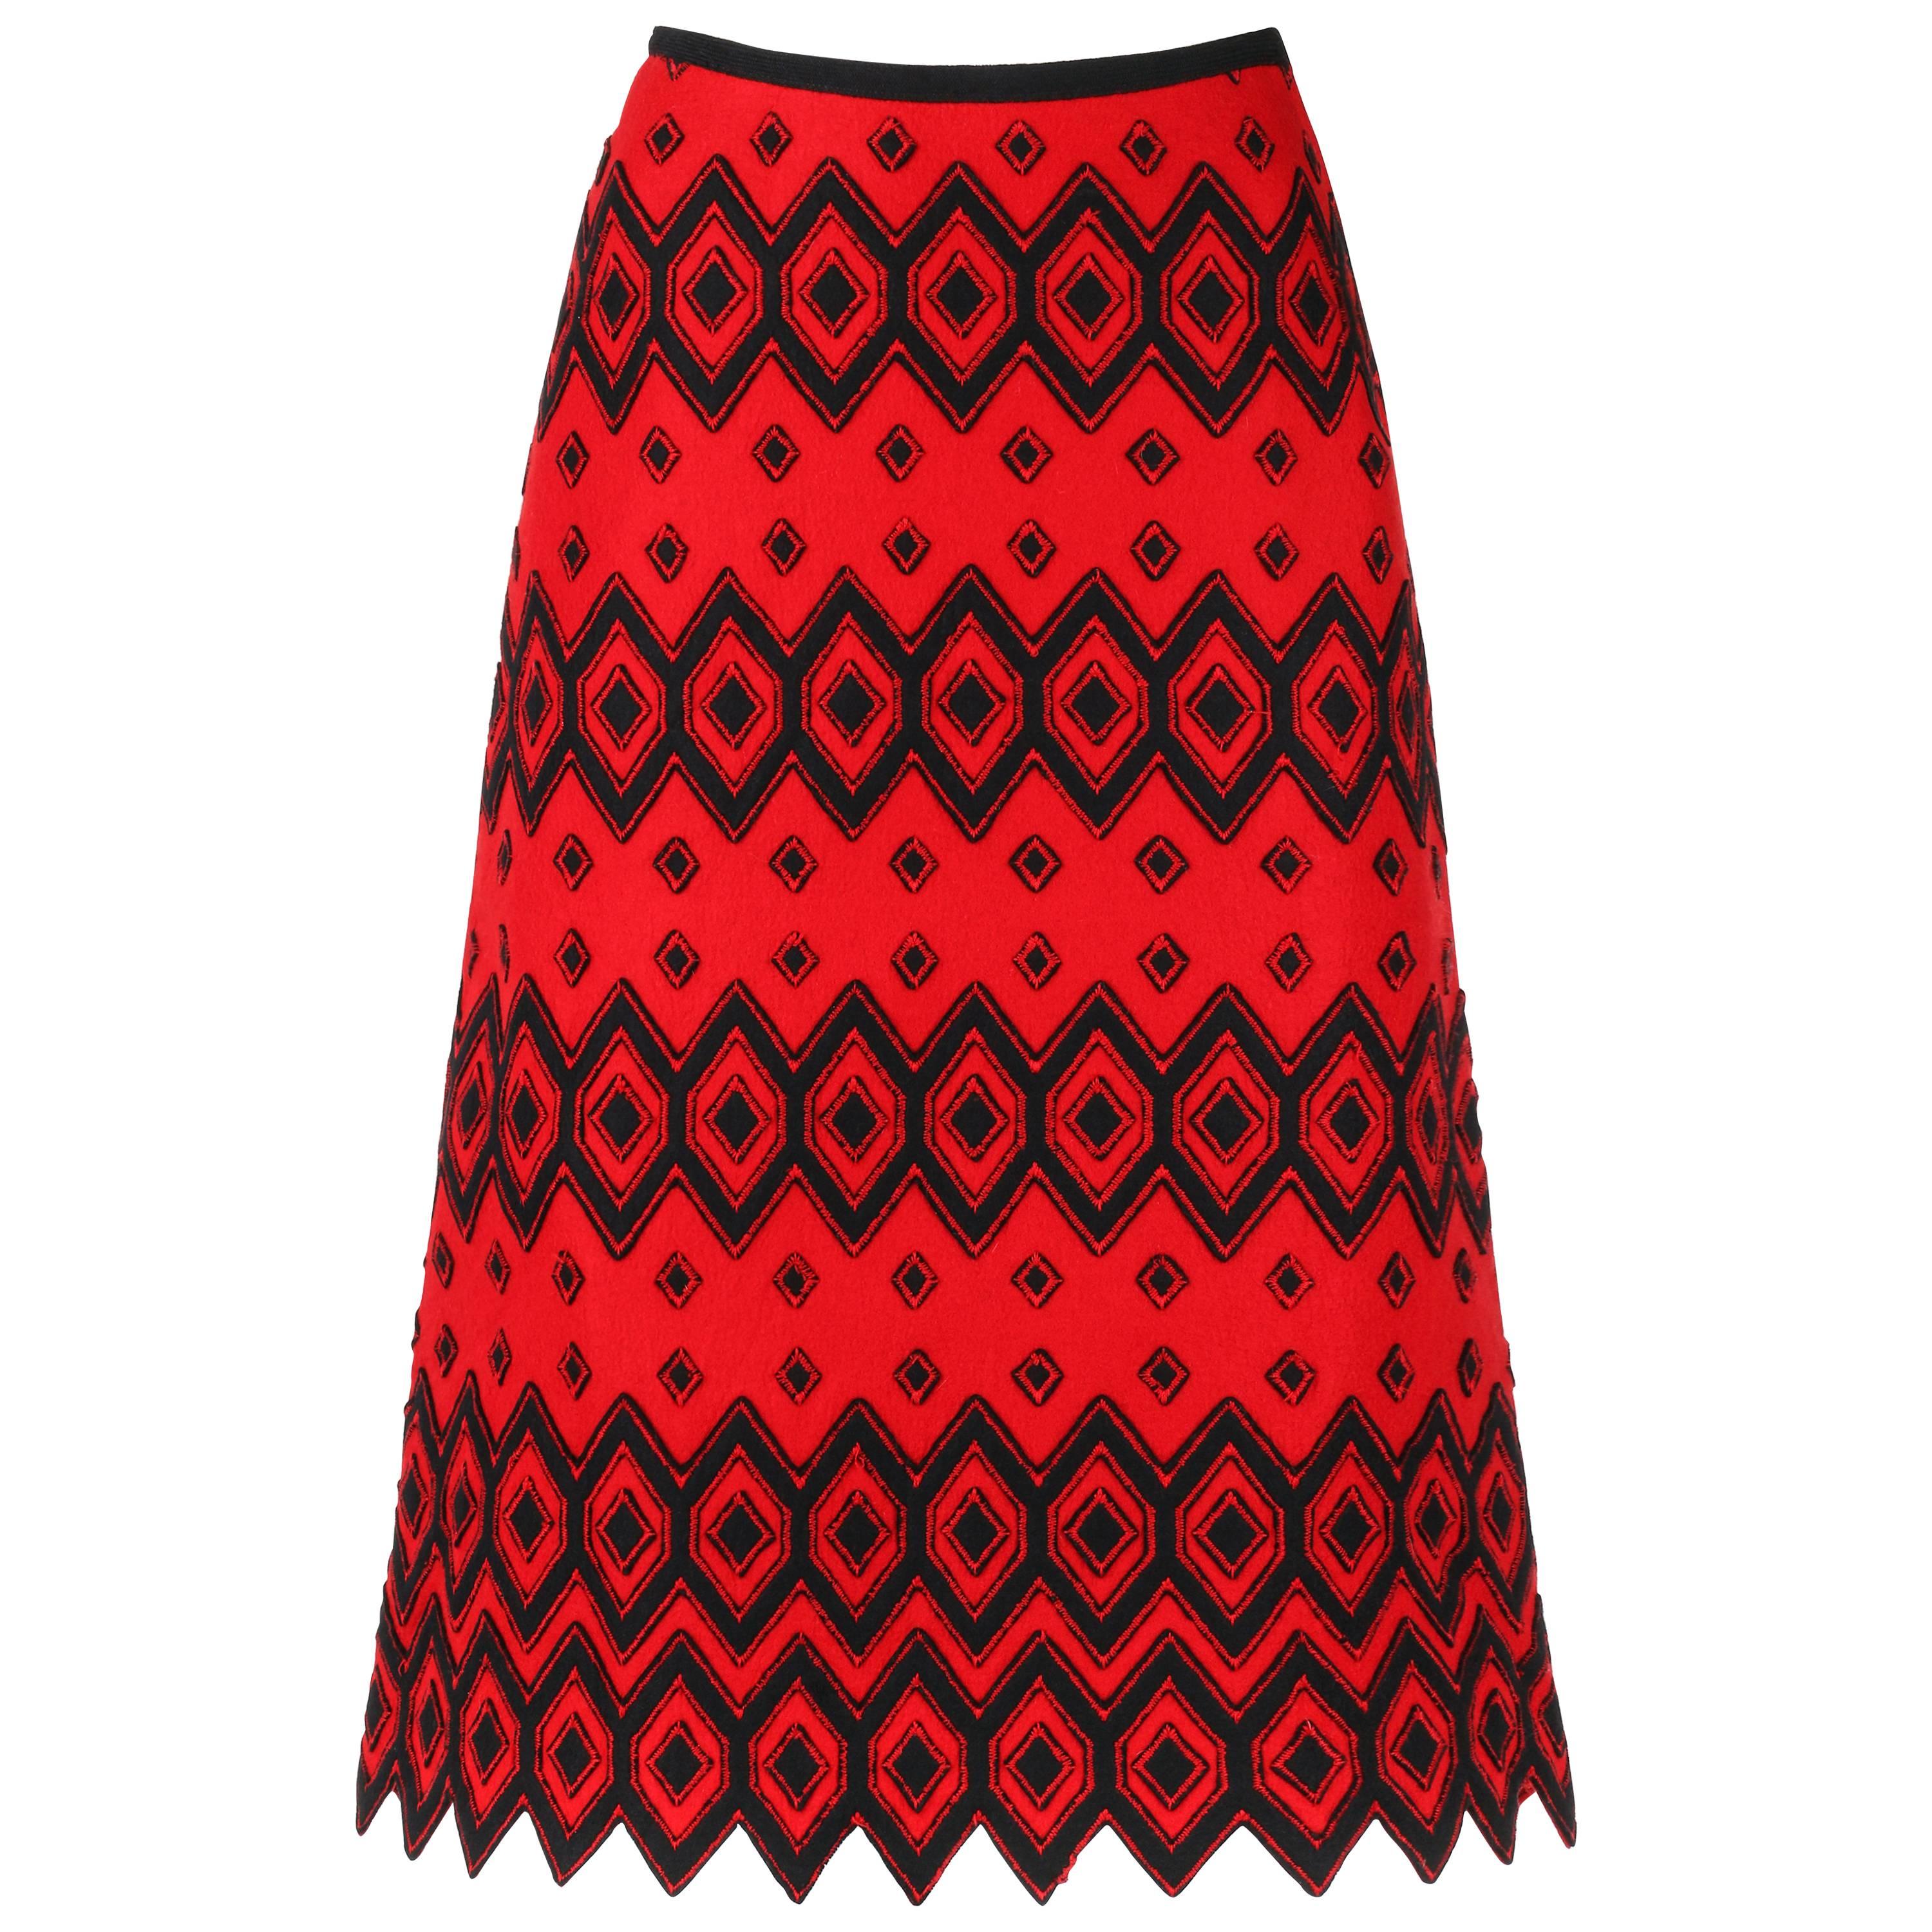 ANNE KLEIN c.1970's Red & Black Diamond Wool Felt A-line Skirt For Sale